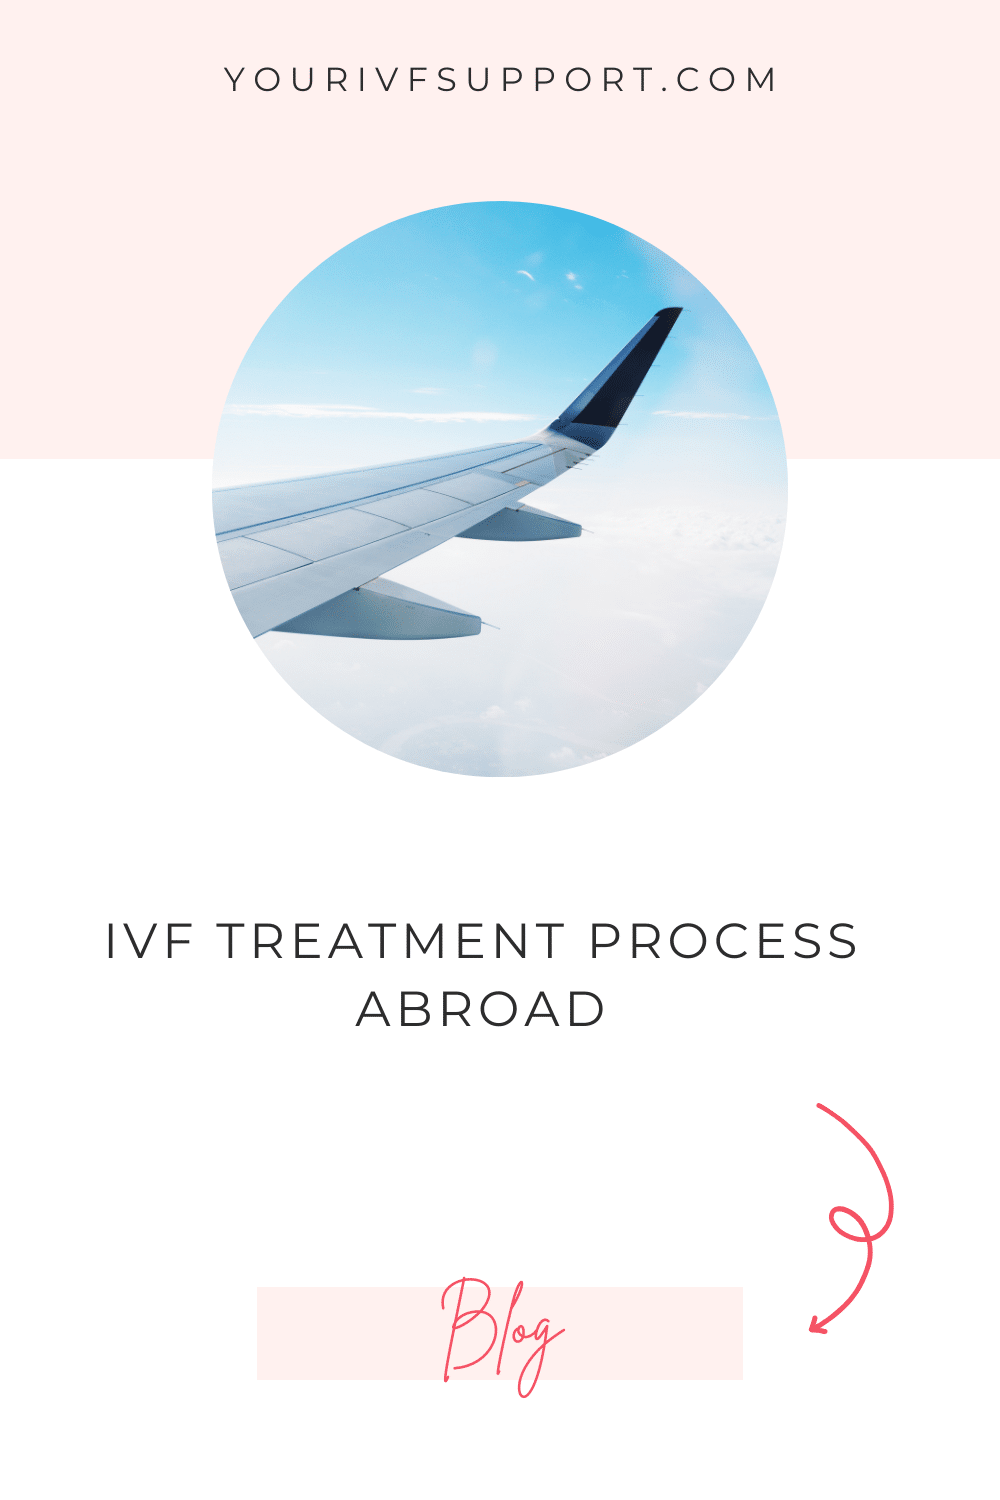 IVF treatment process abroad